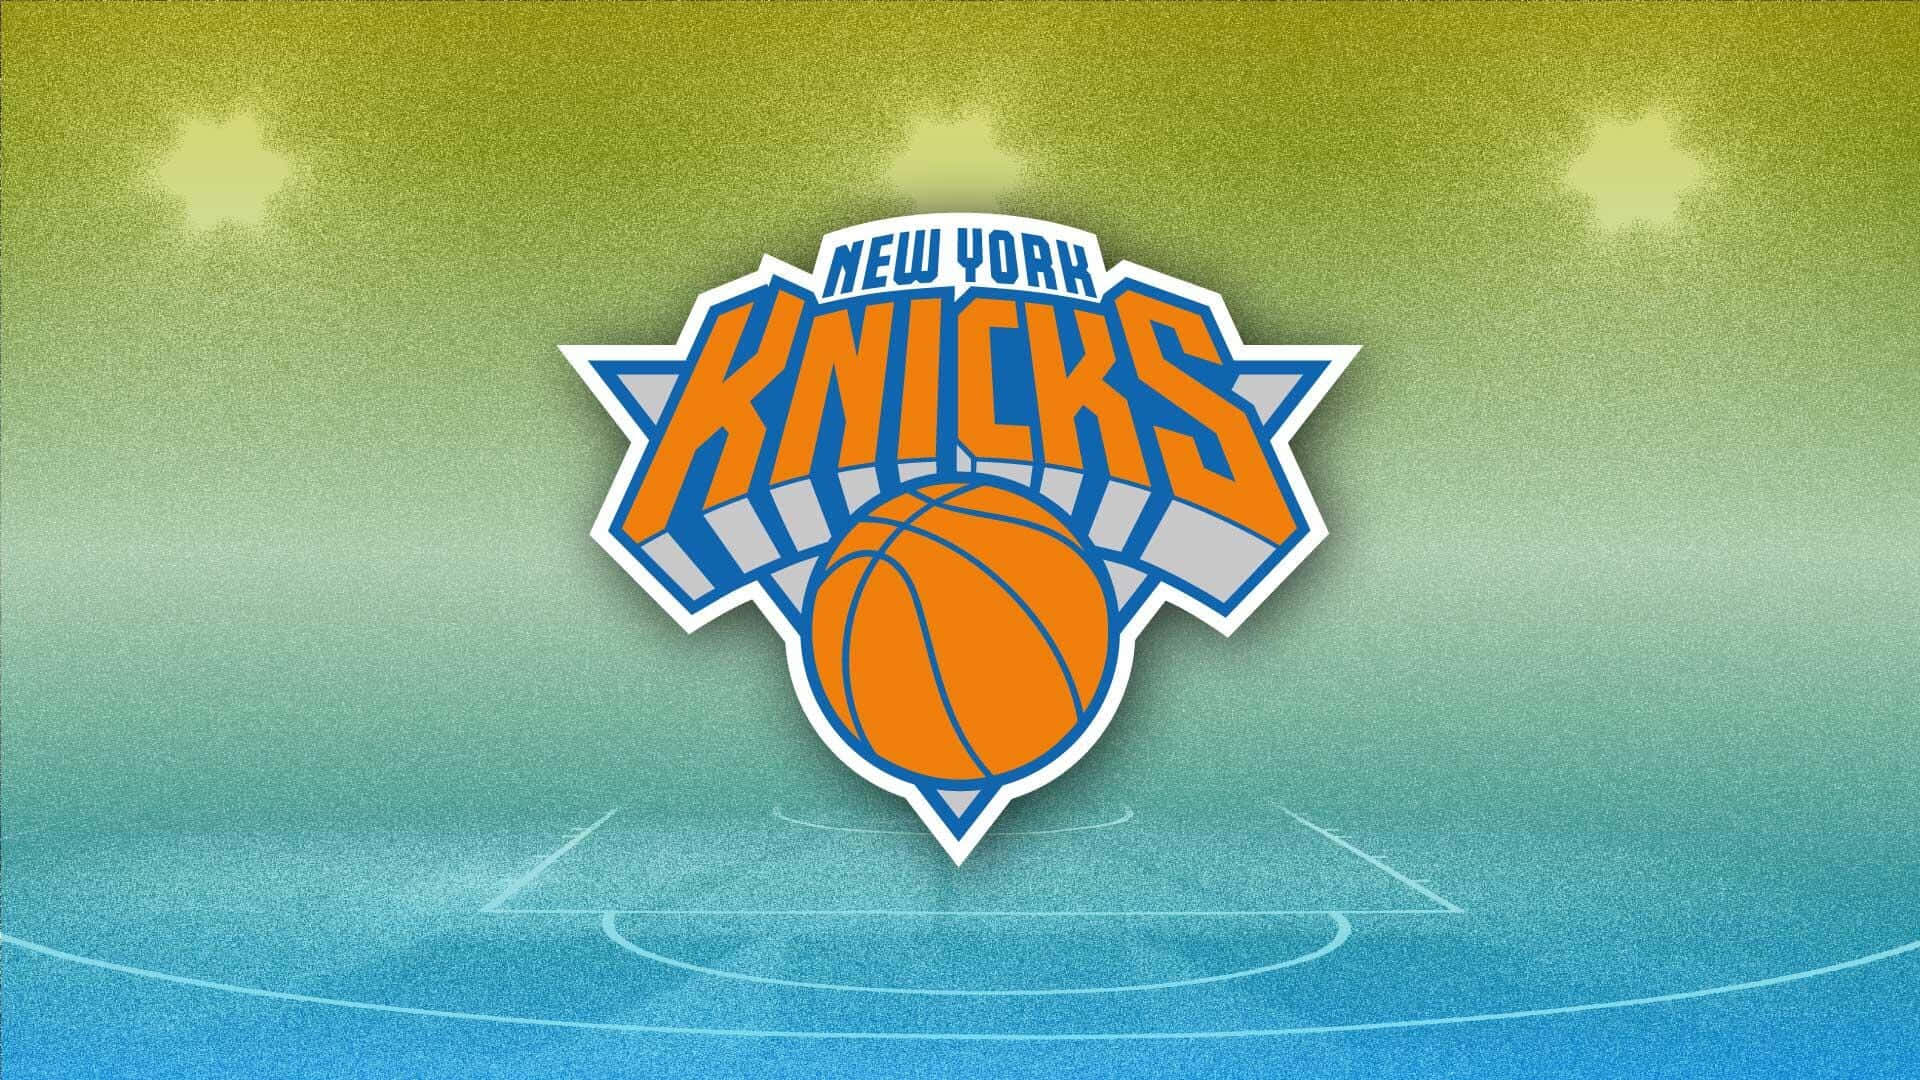 Fliegehoch Mit Den New York Knicks! Wallpaper